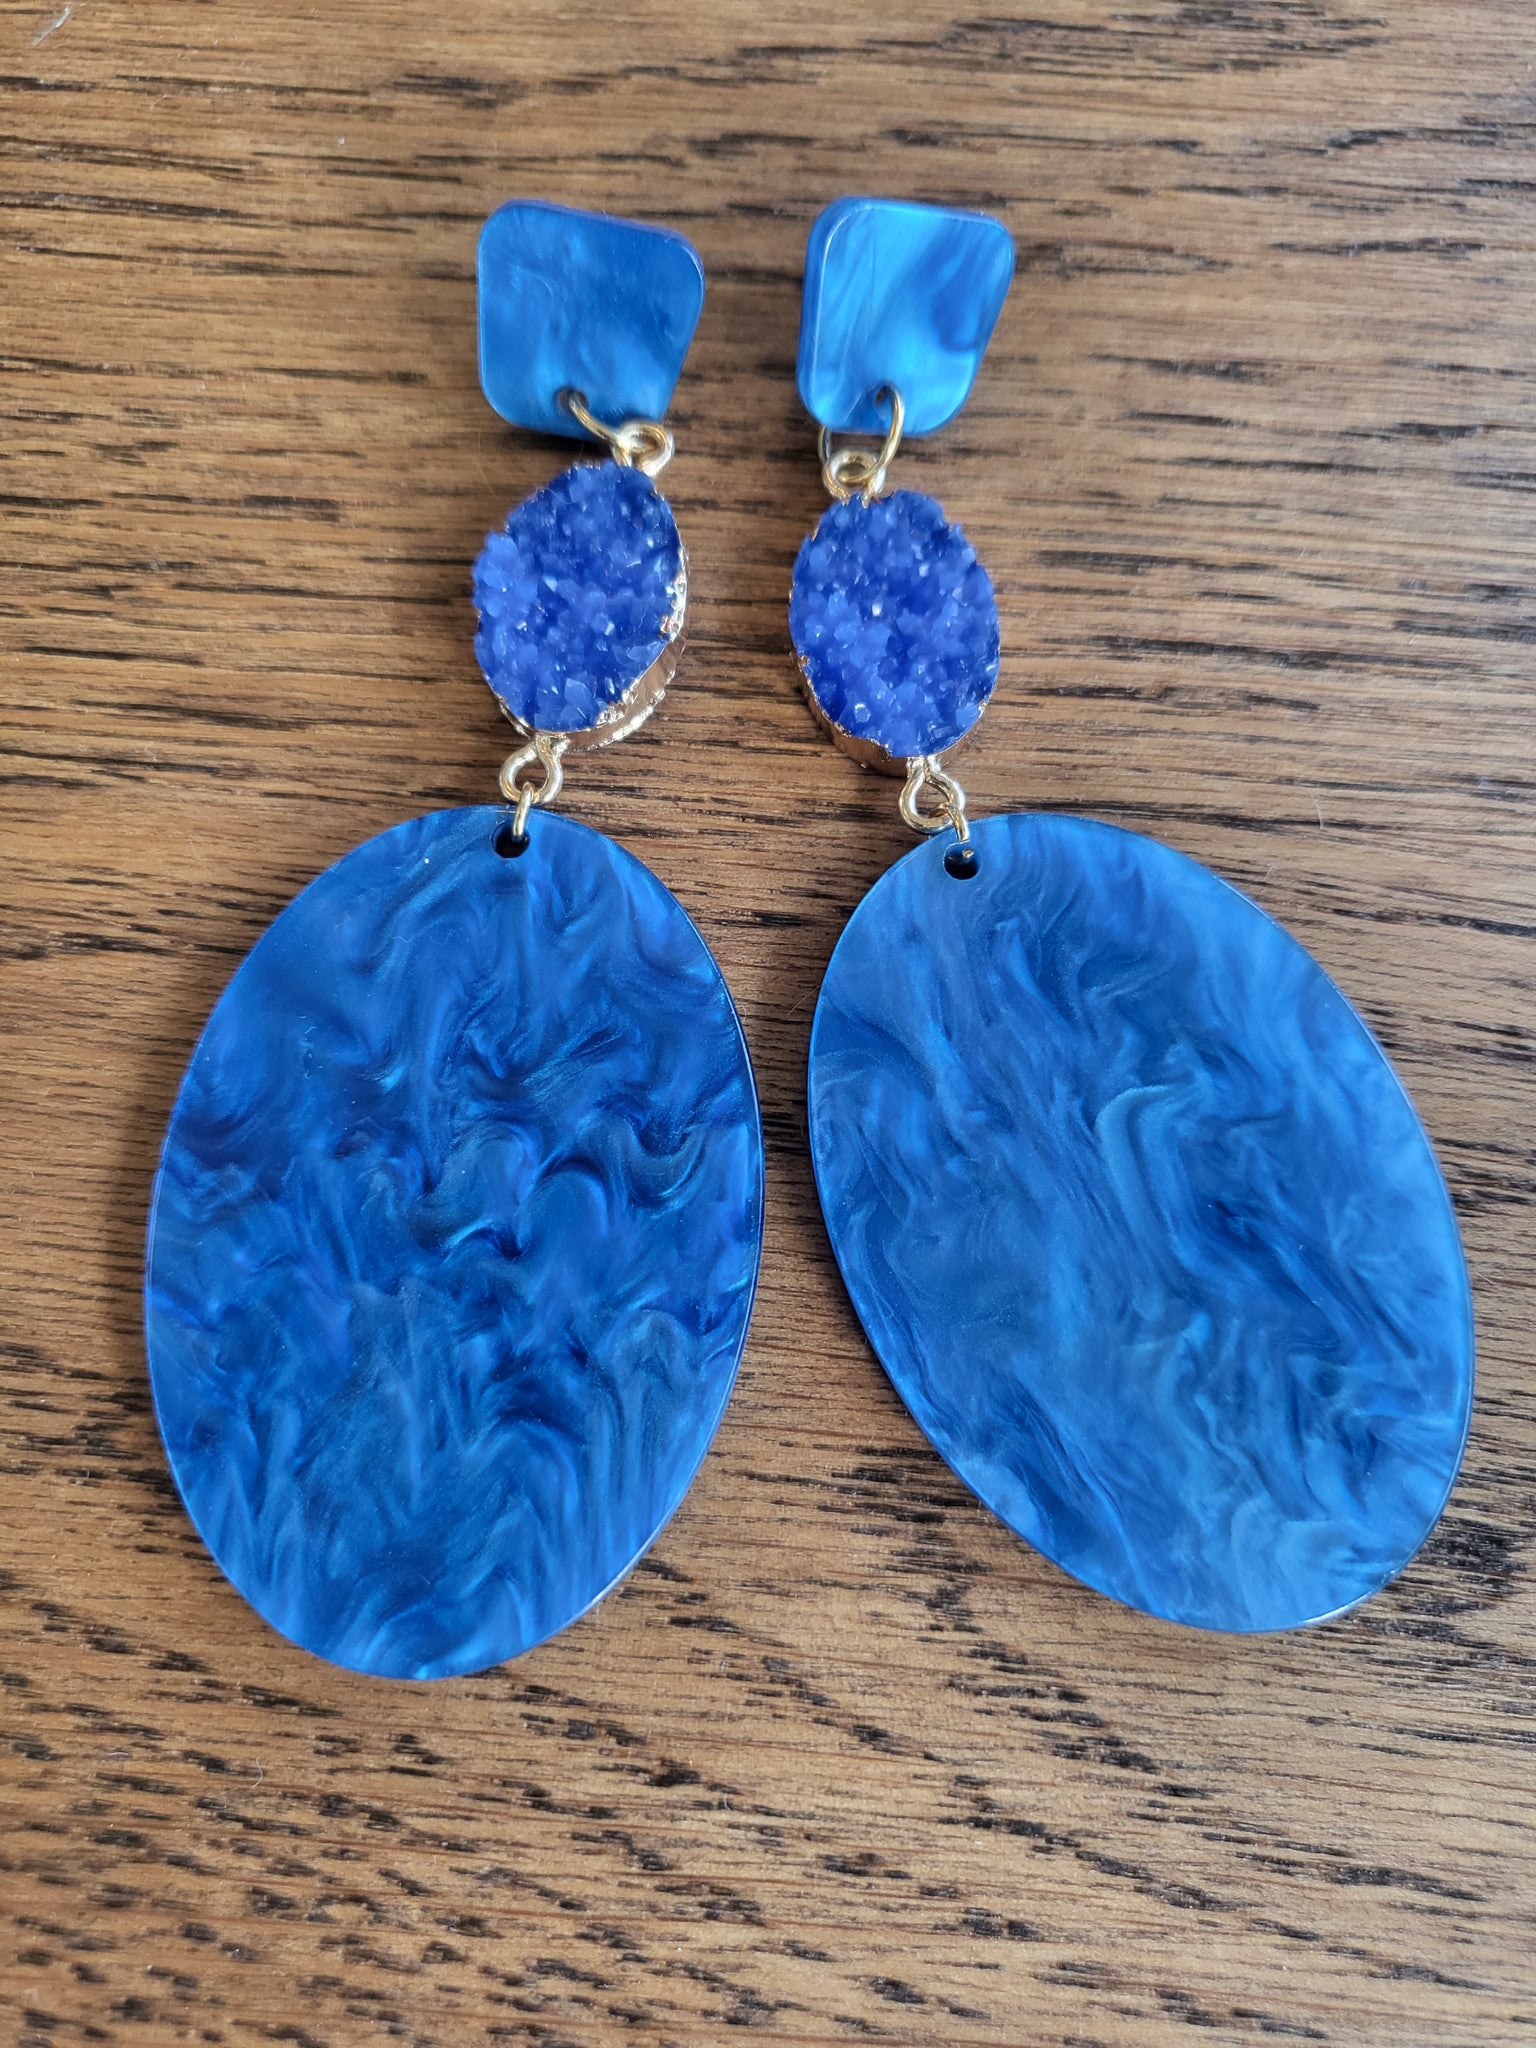 Long earrings with blue druzy stones